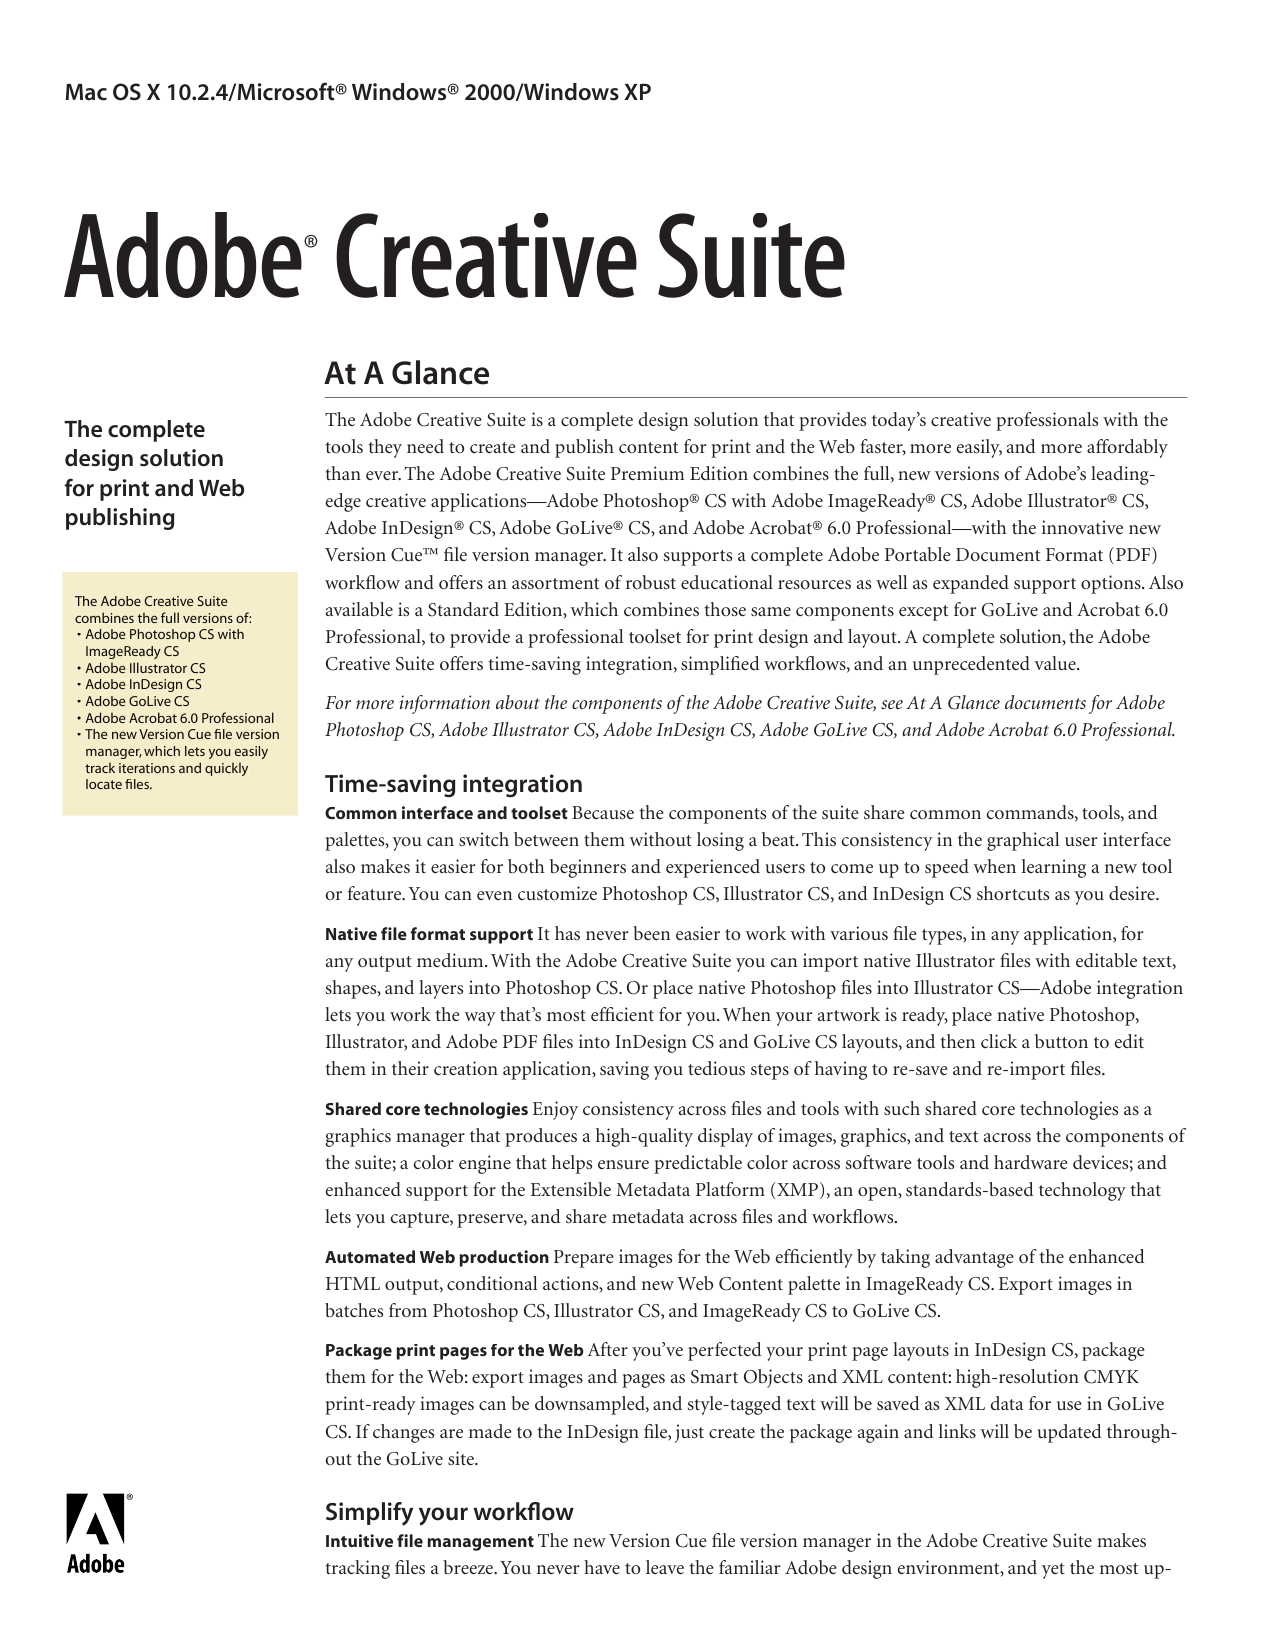 Adobe Creative Suite At A Glance Manualzz